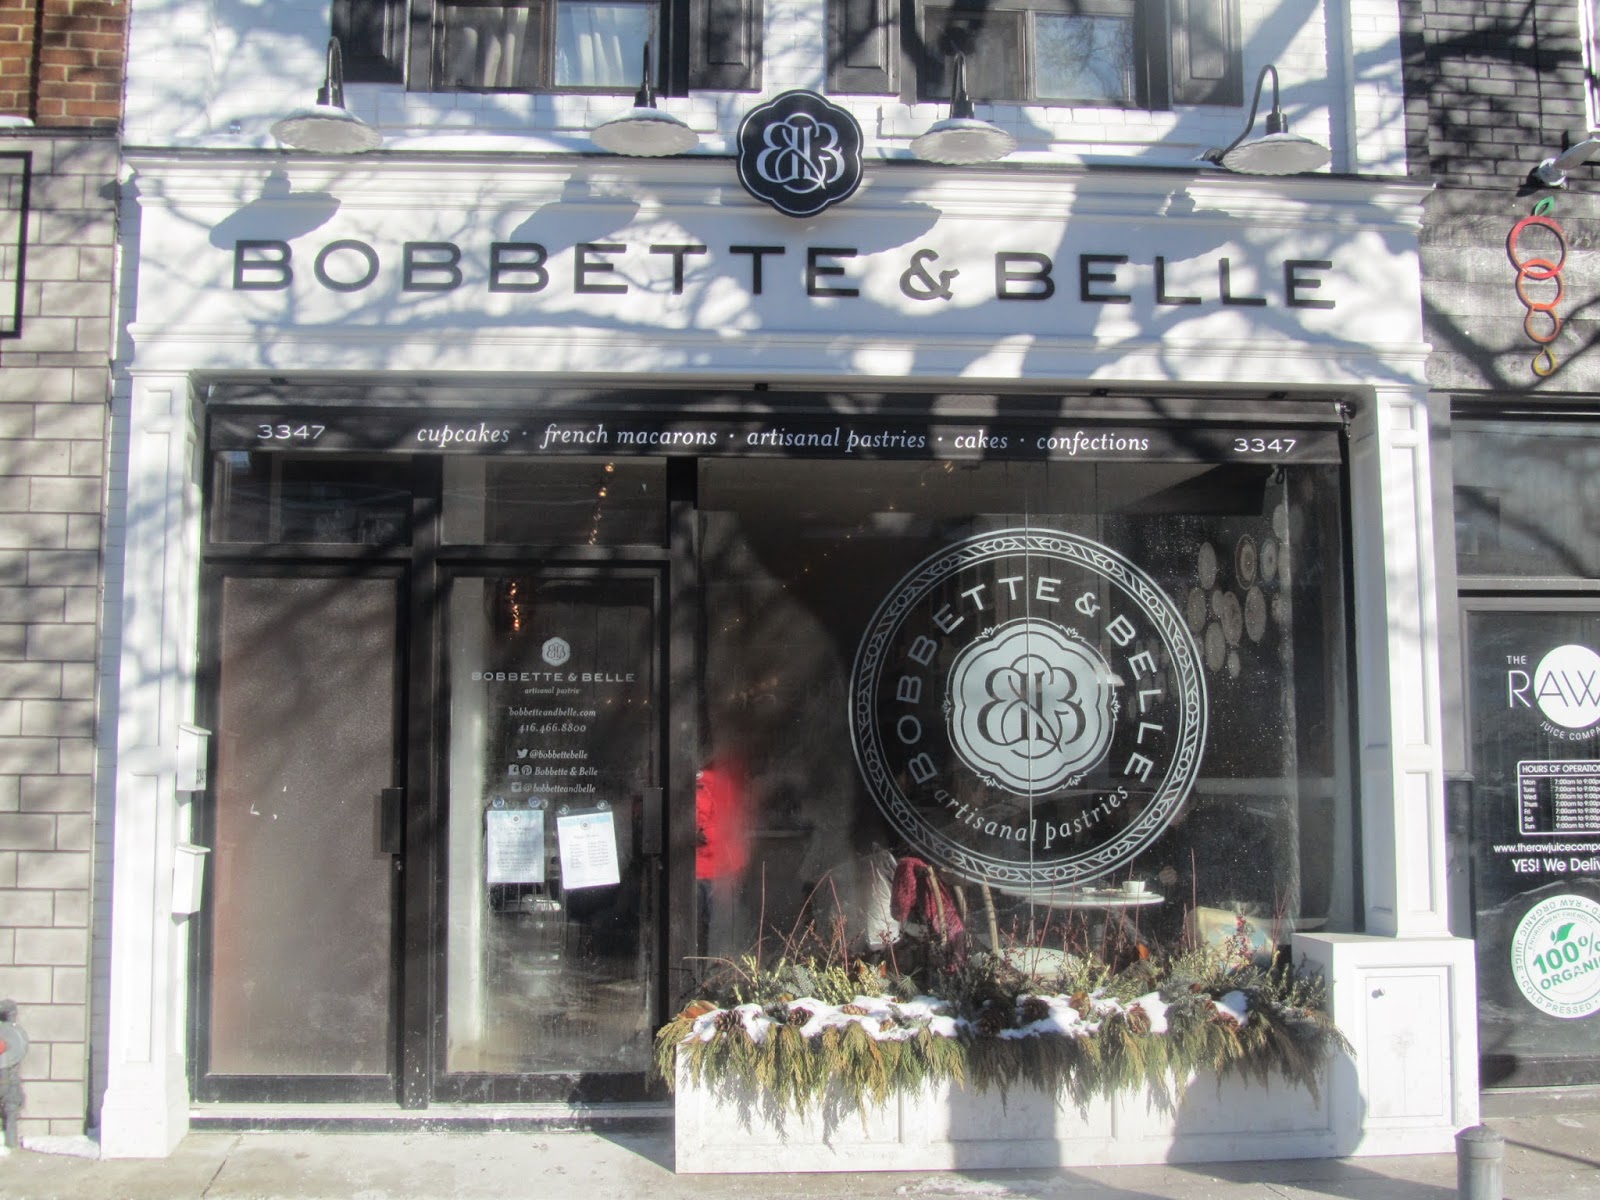 My visit to Bobbette & Belle artisanal pastry shop!